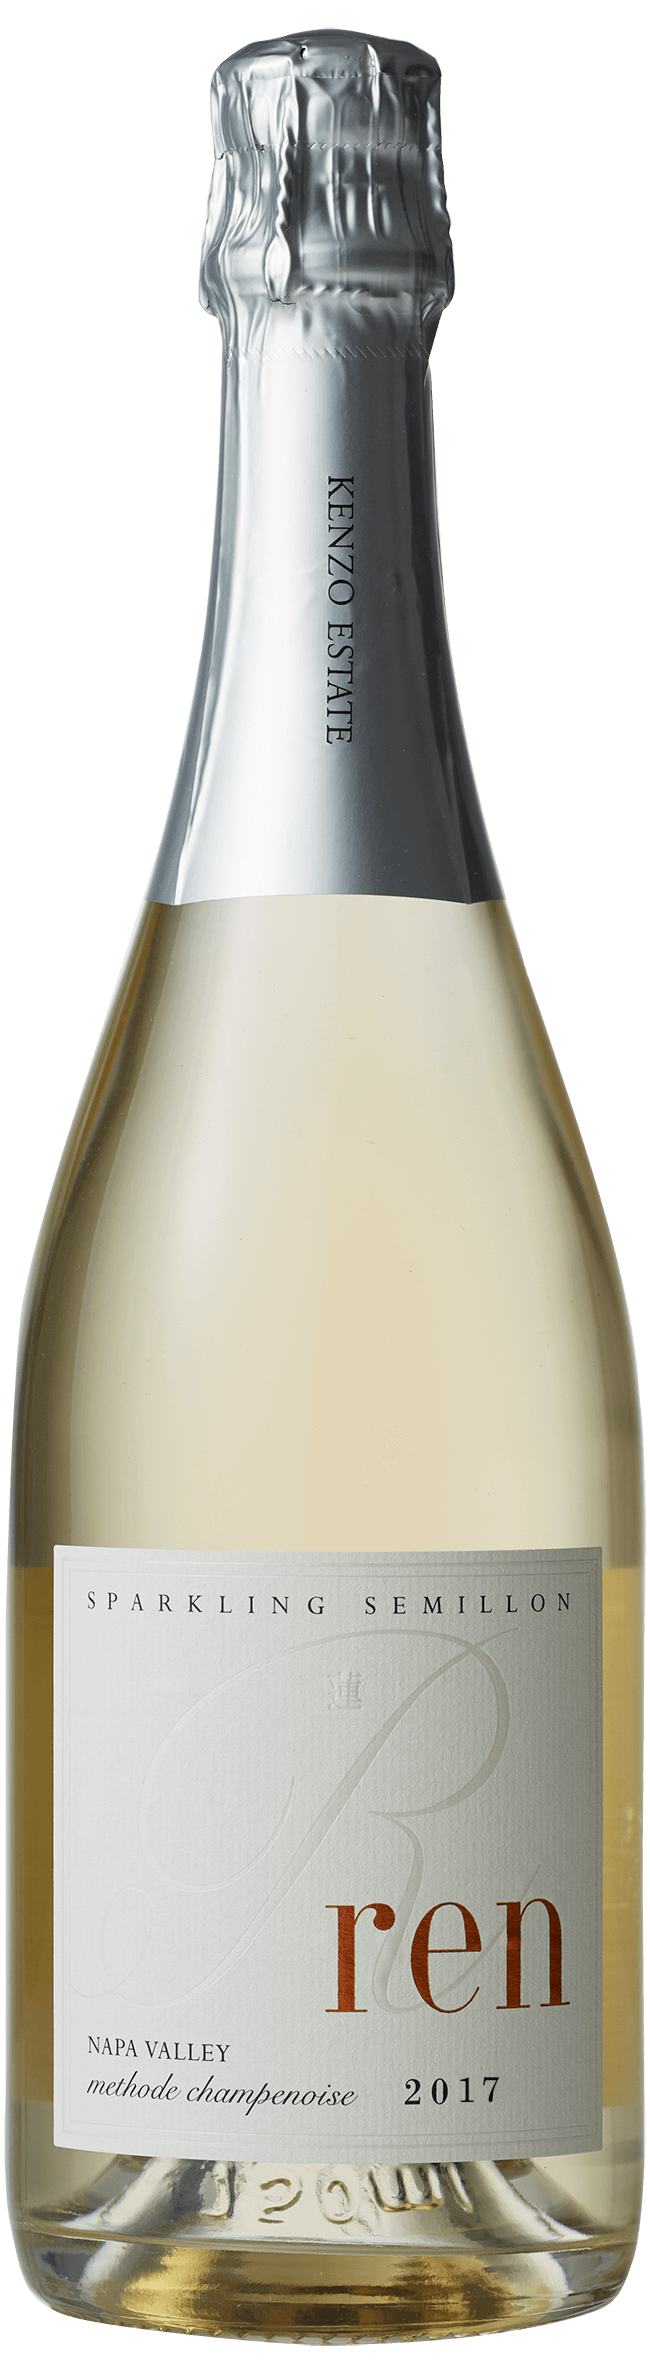 REN2017 ケンゾーエステートSPARKLING SEMILLON - ワイン